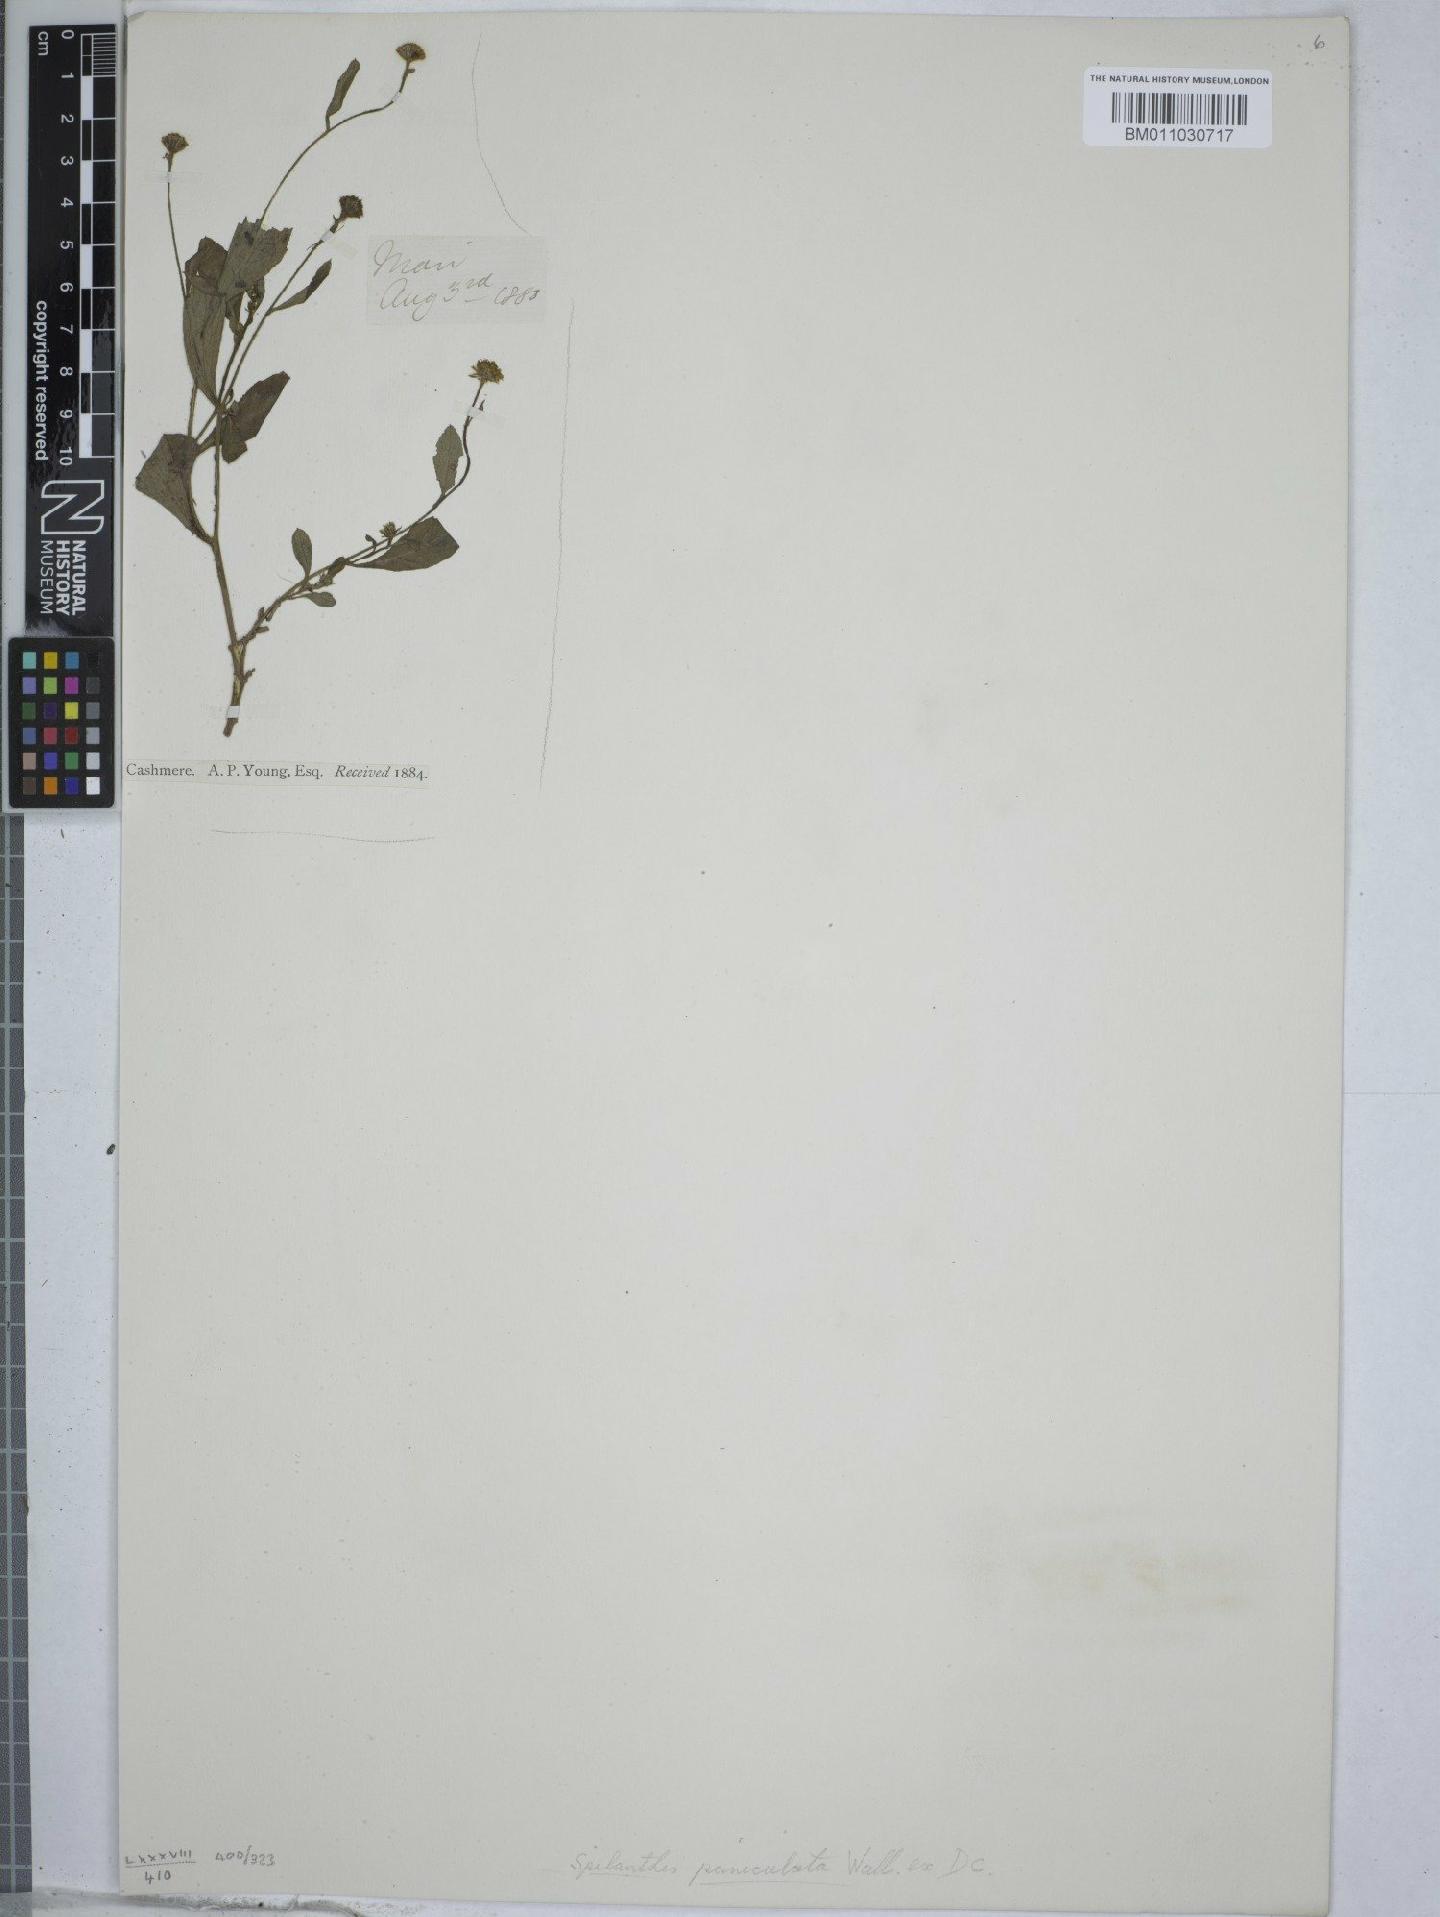 To NHMUK collection (Acmella paniculata Wall. ex DC.; NHMUK:ecatalogue:9154411)